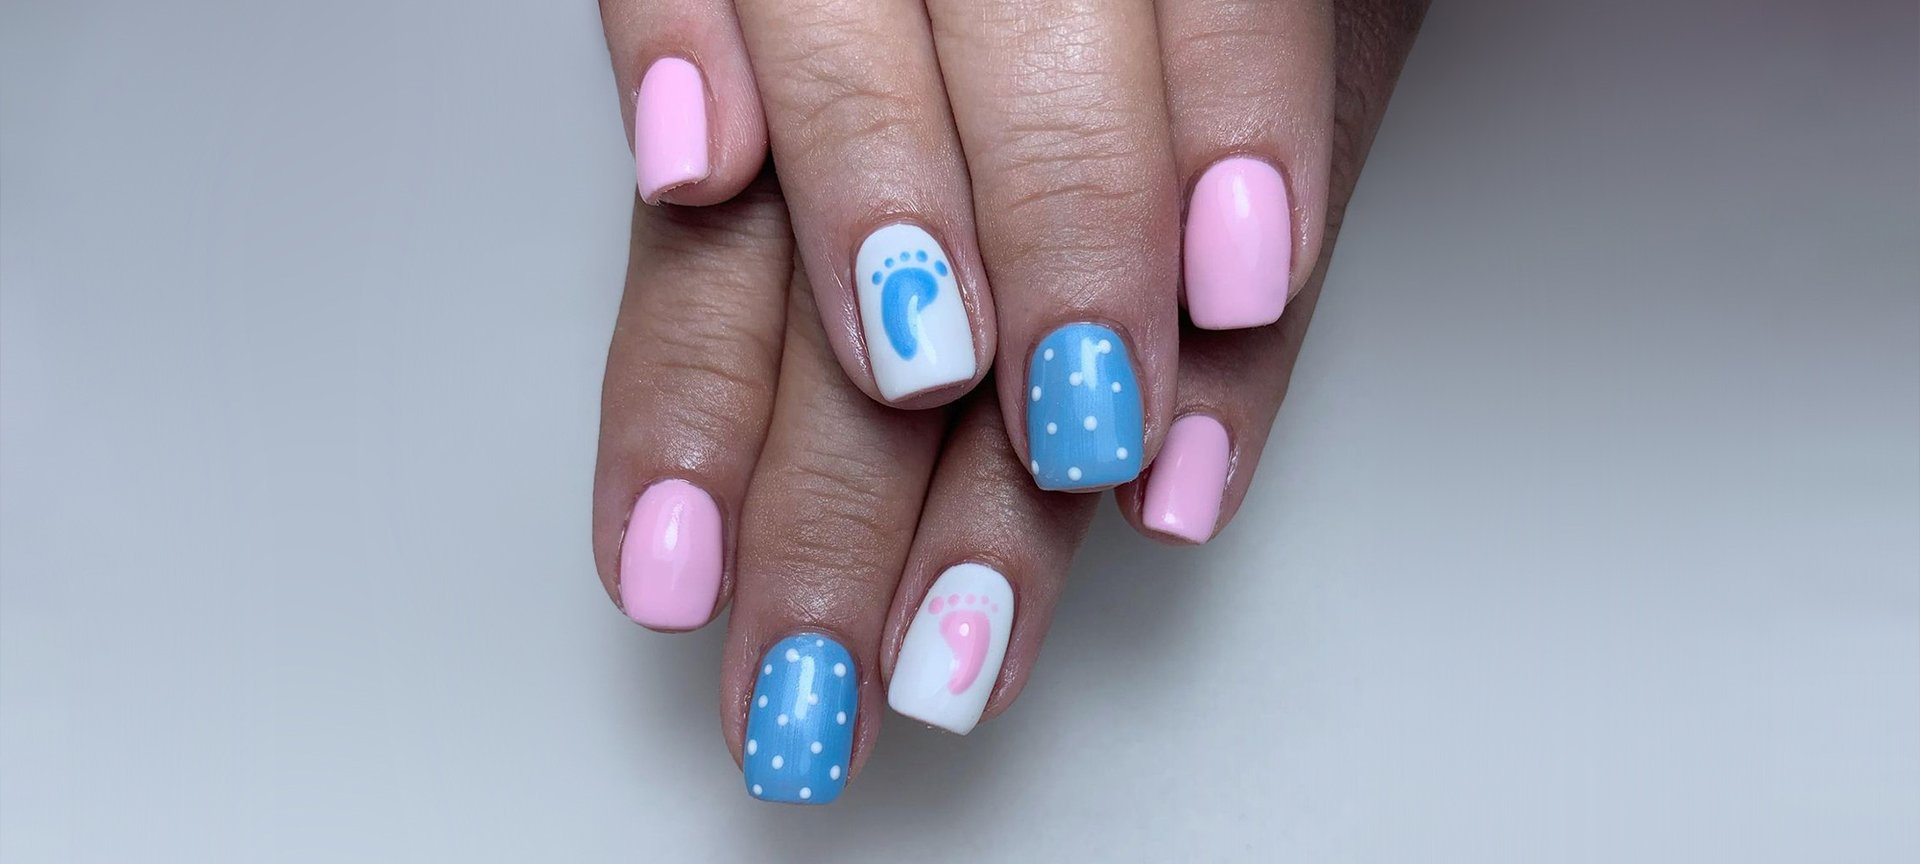 Baby Shower Nails Nail Art Water Decals Stickers Gift Manicure Salon Mani  Polish | eBay